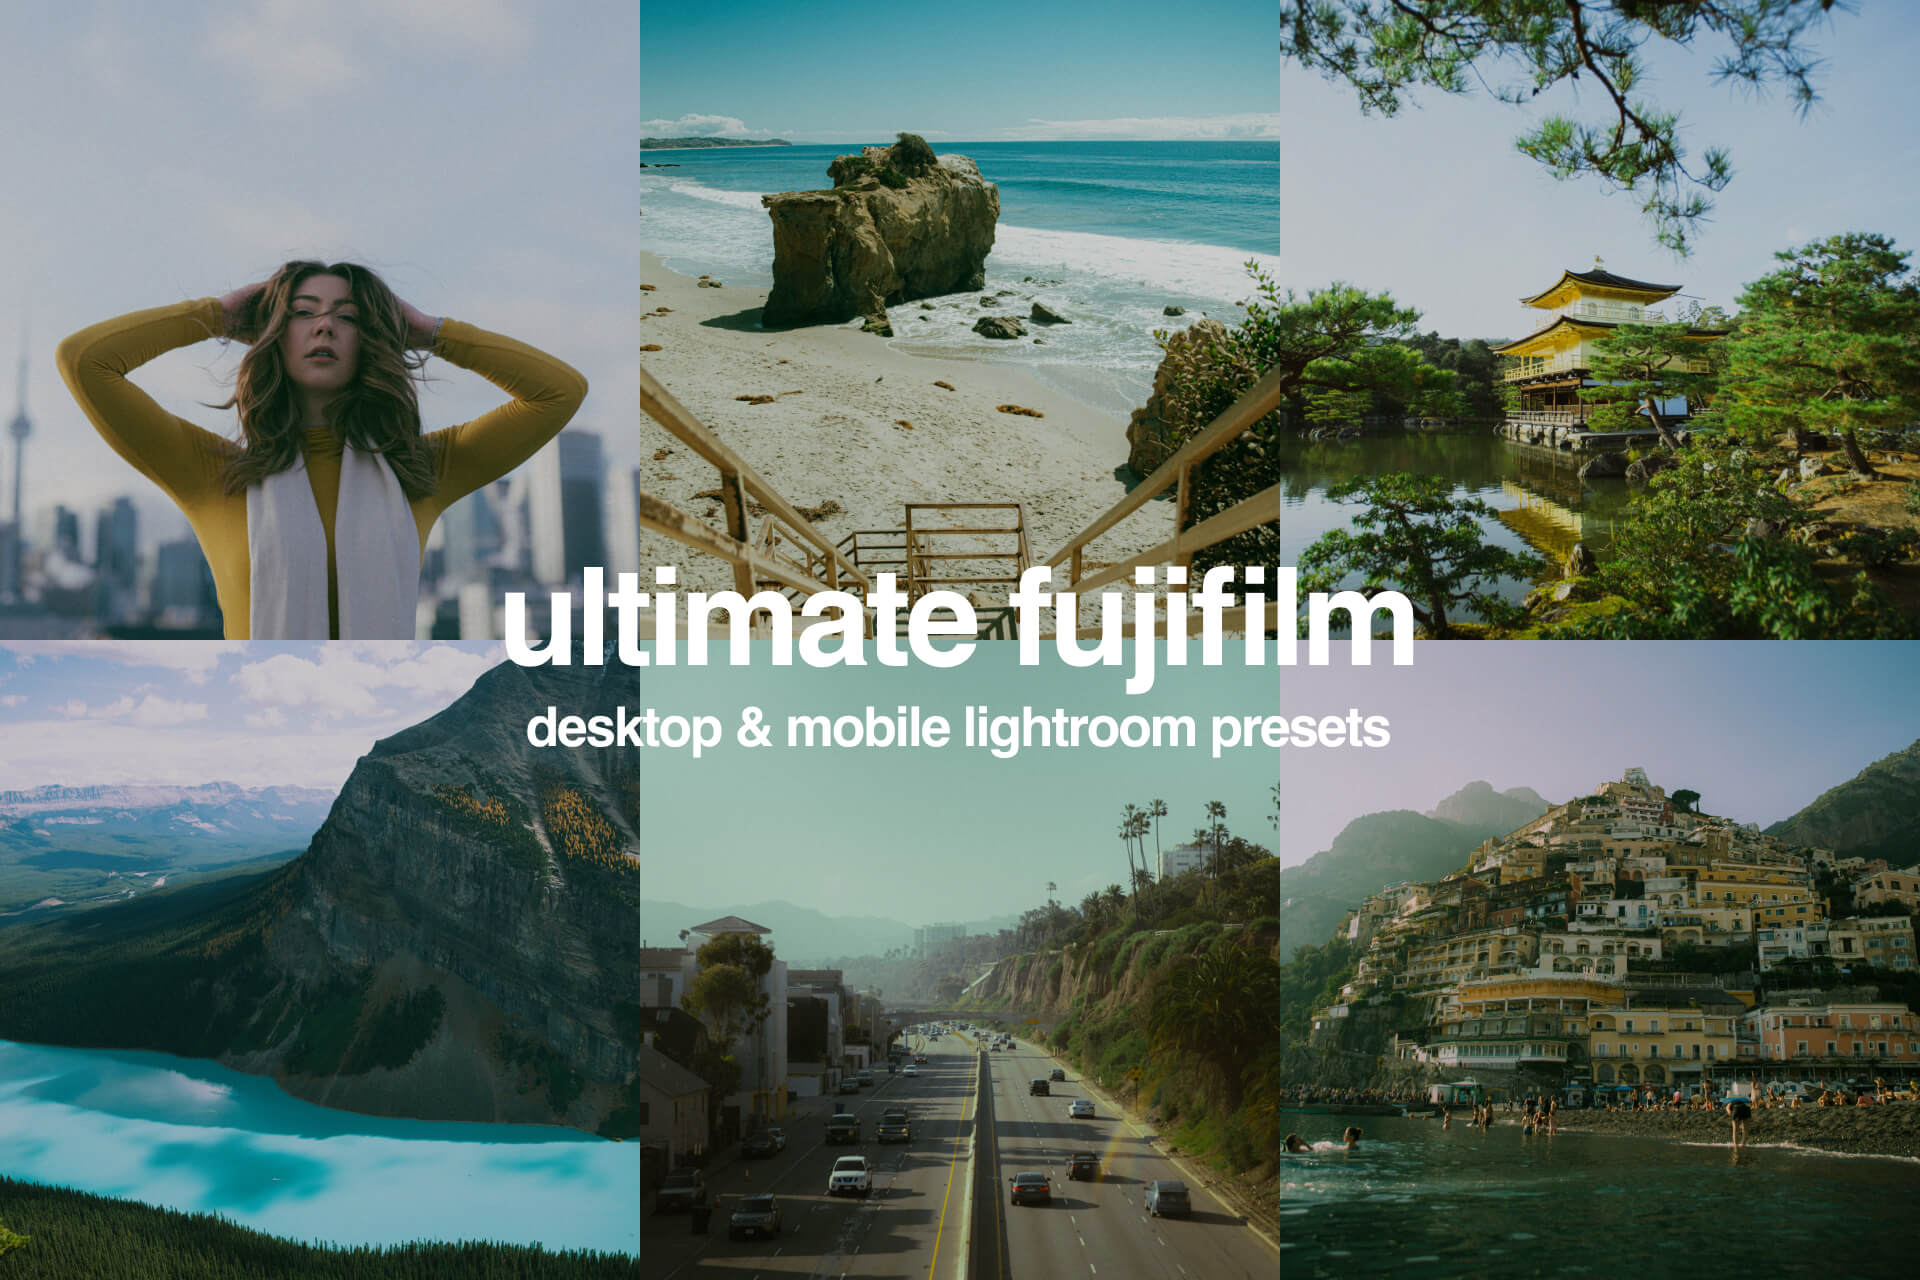 The Ultimate Fujifilm Lightroom Preset Pack